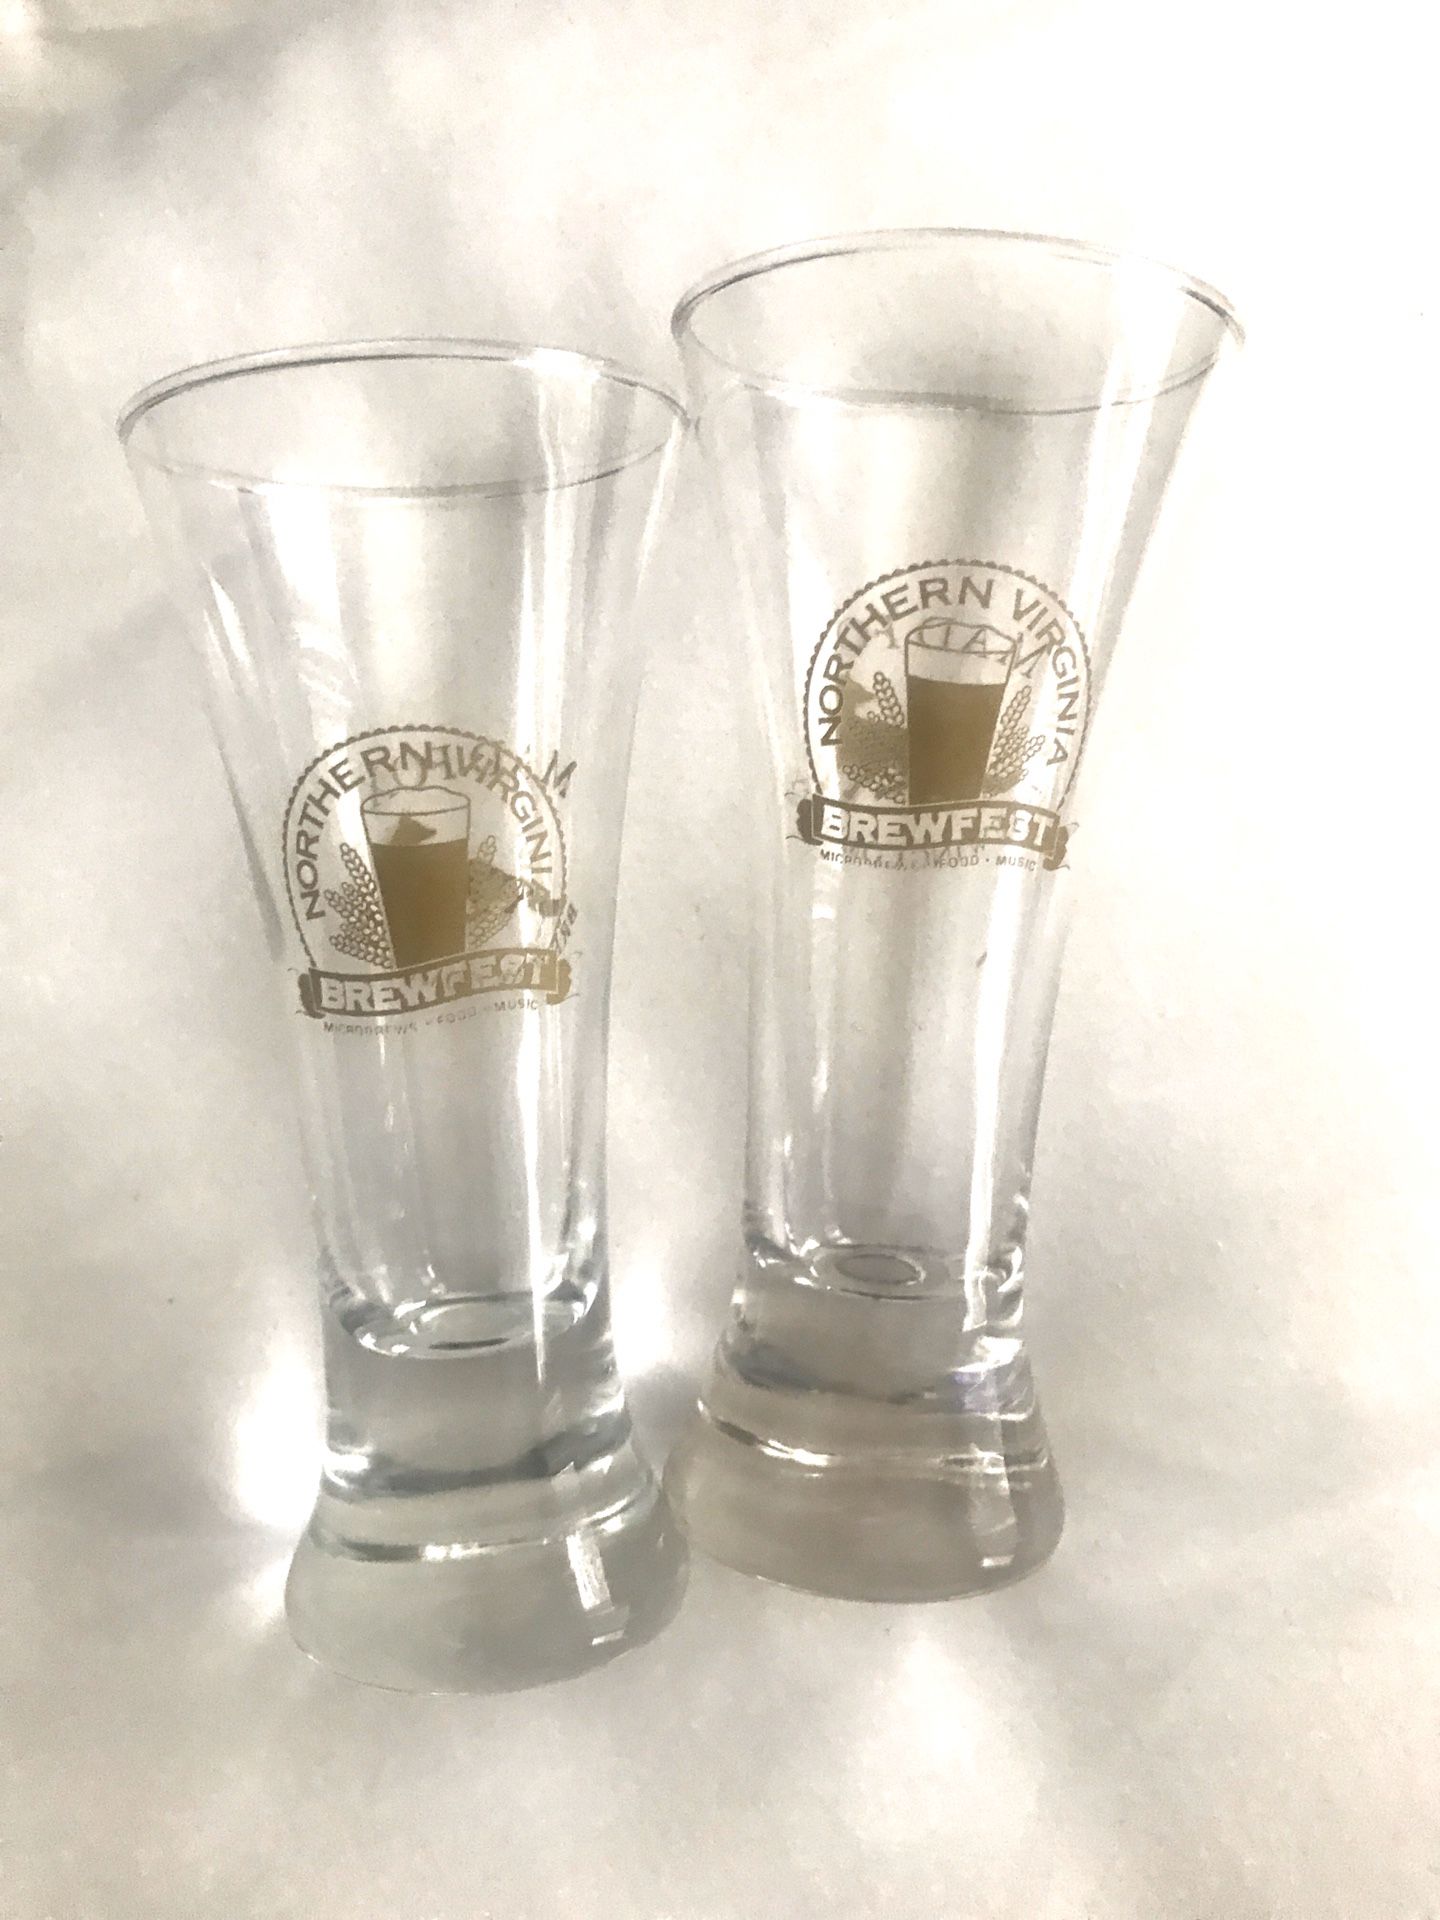 (Two) Northern Virginia Brewfest. Big shoot glass/ Beer tasting glass